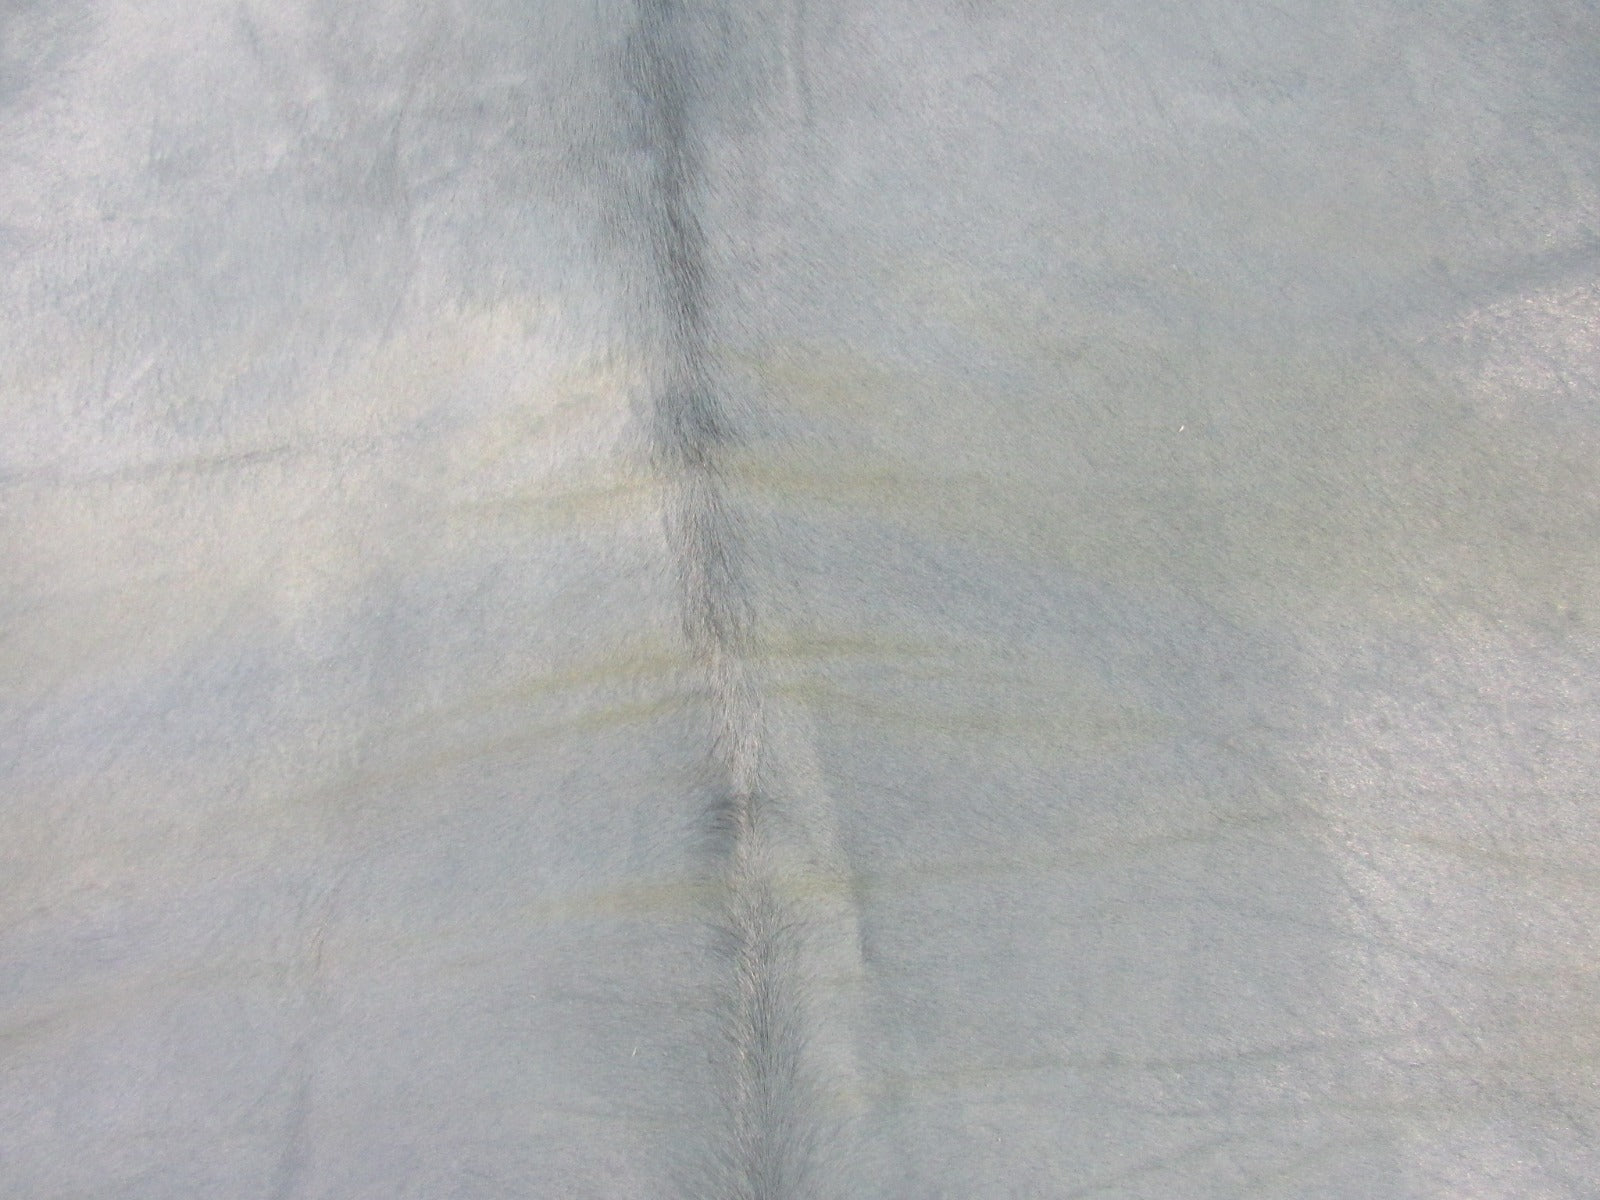 Dyed Teal Cowhide Rug - Size: 7x7 feet K-273